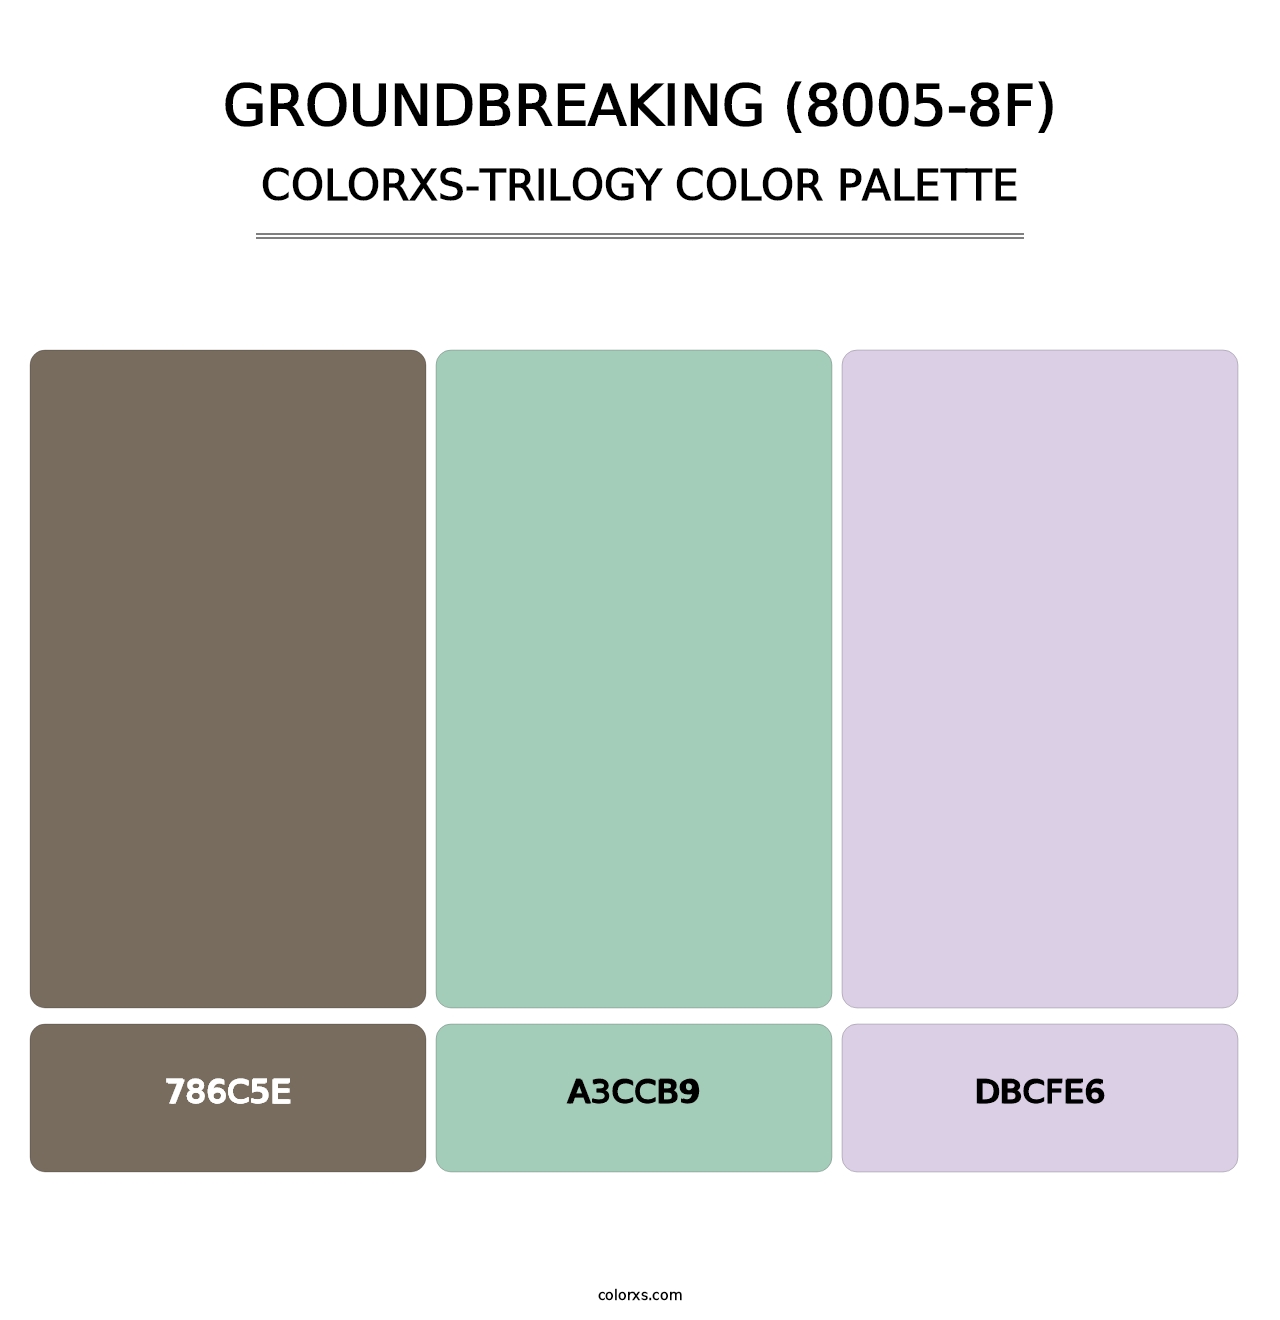 Groundbreaking (8005-8F) - Colorxs Trilogy Palette